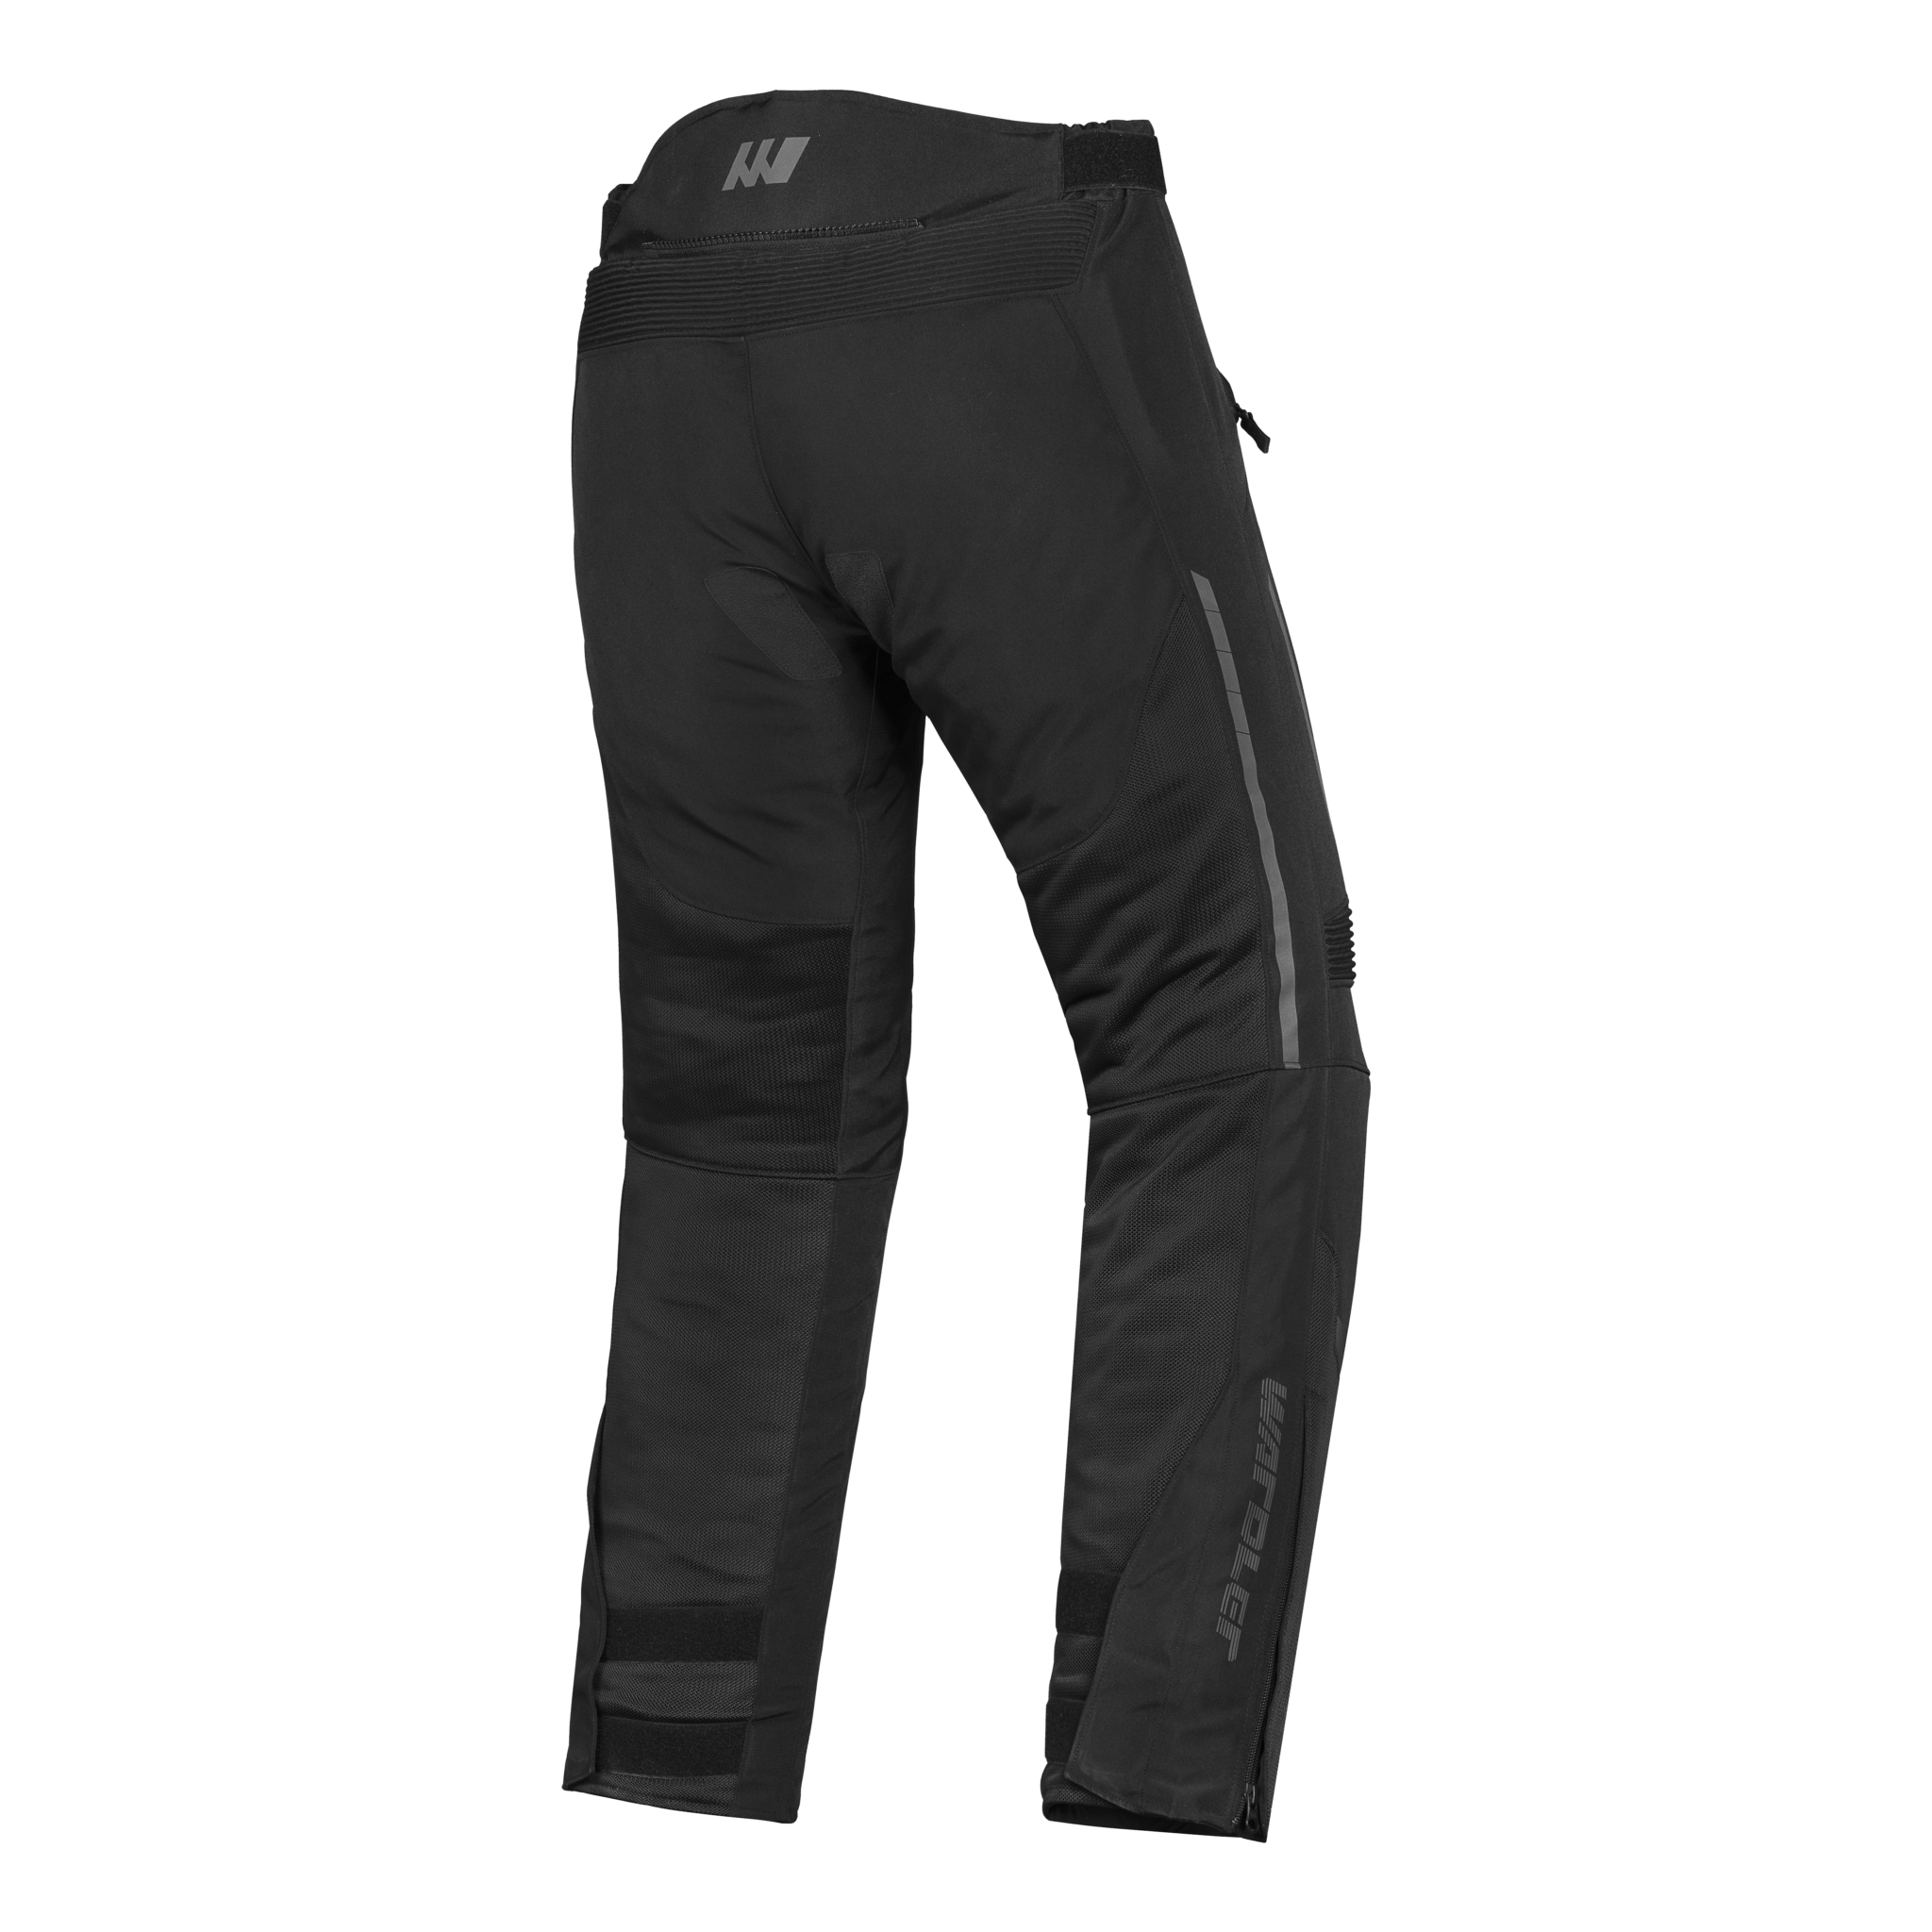 Mesh Summer Motorcycle Pants breathable waterproof silver pant back